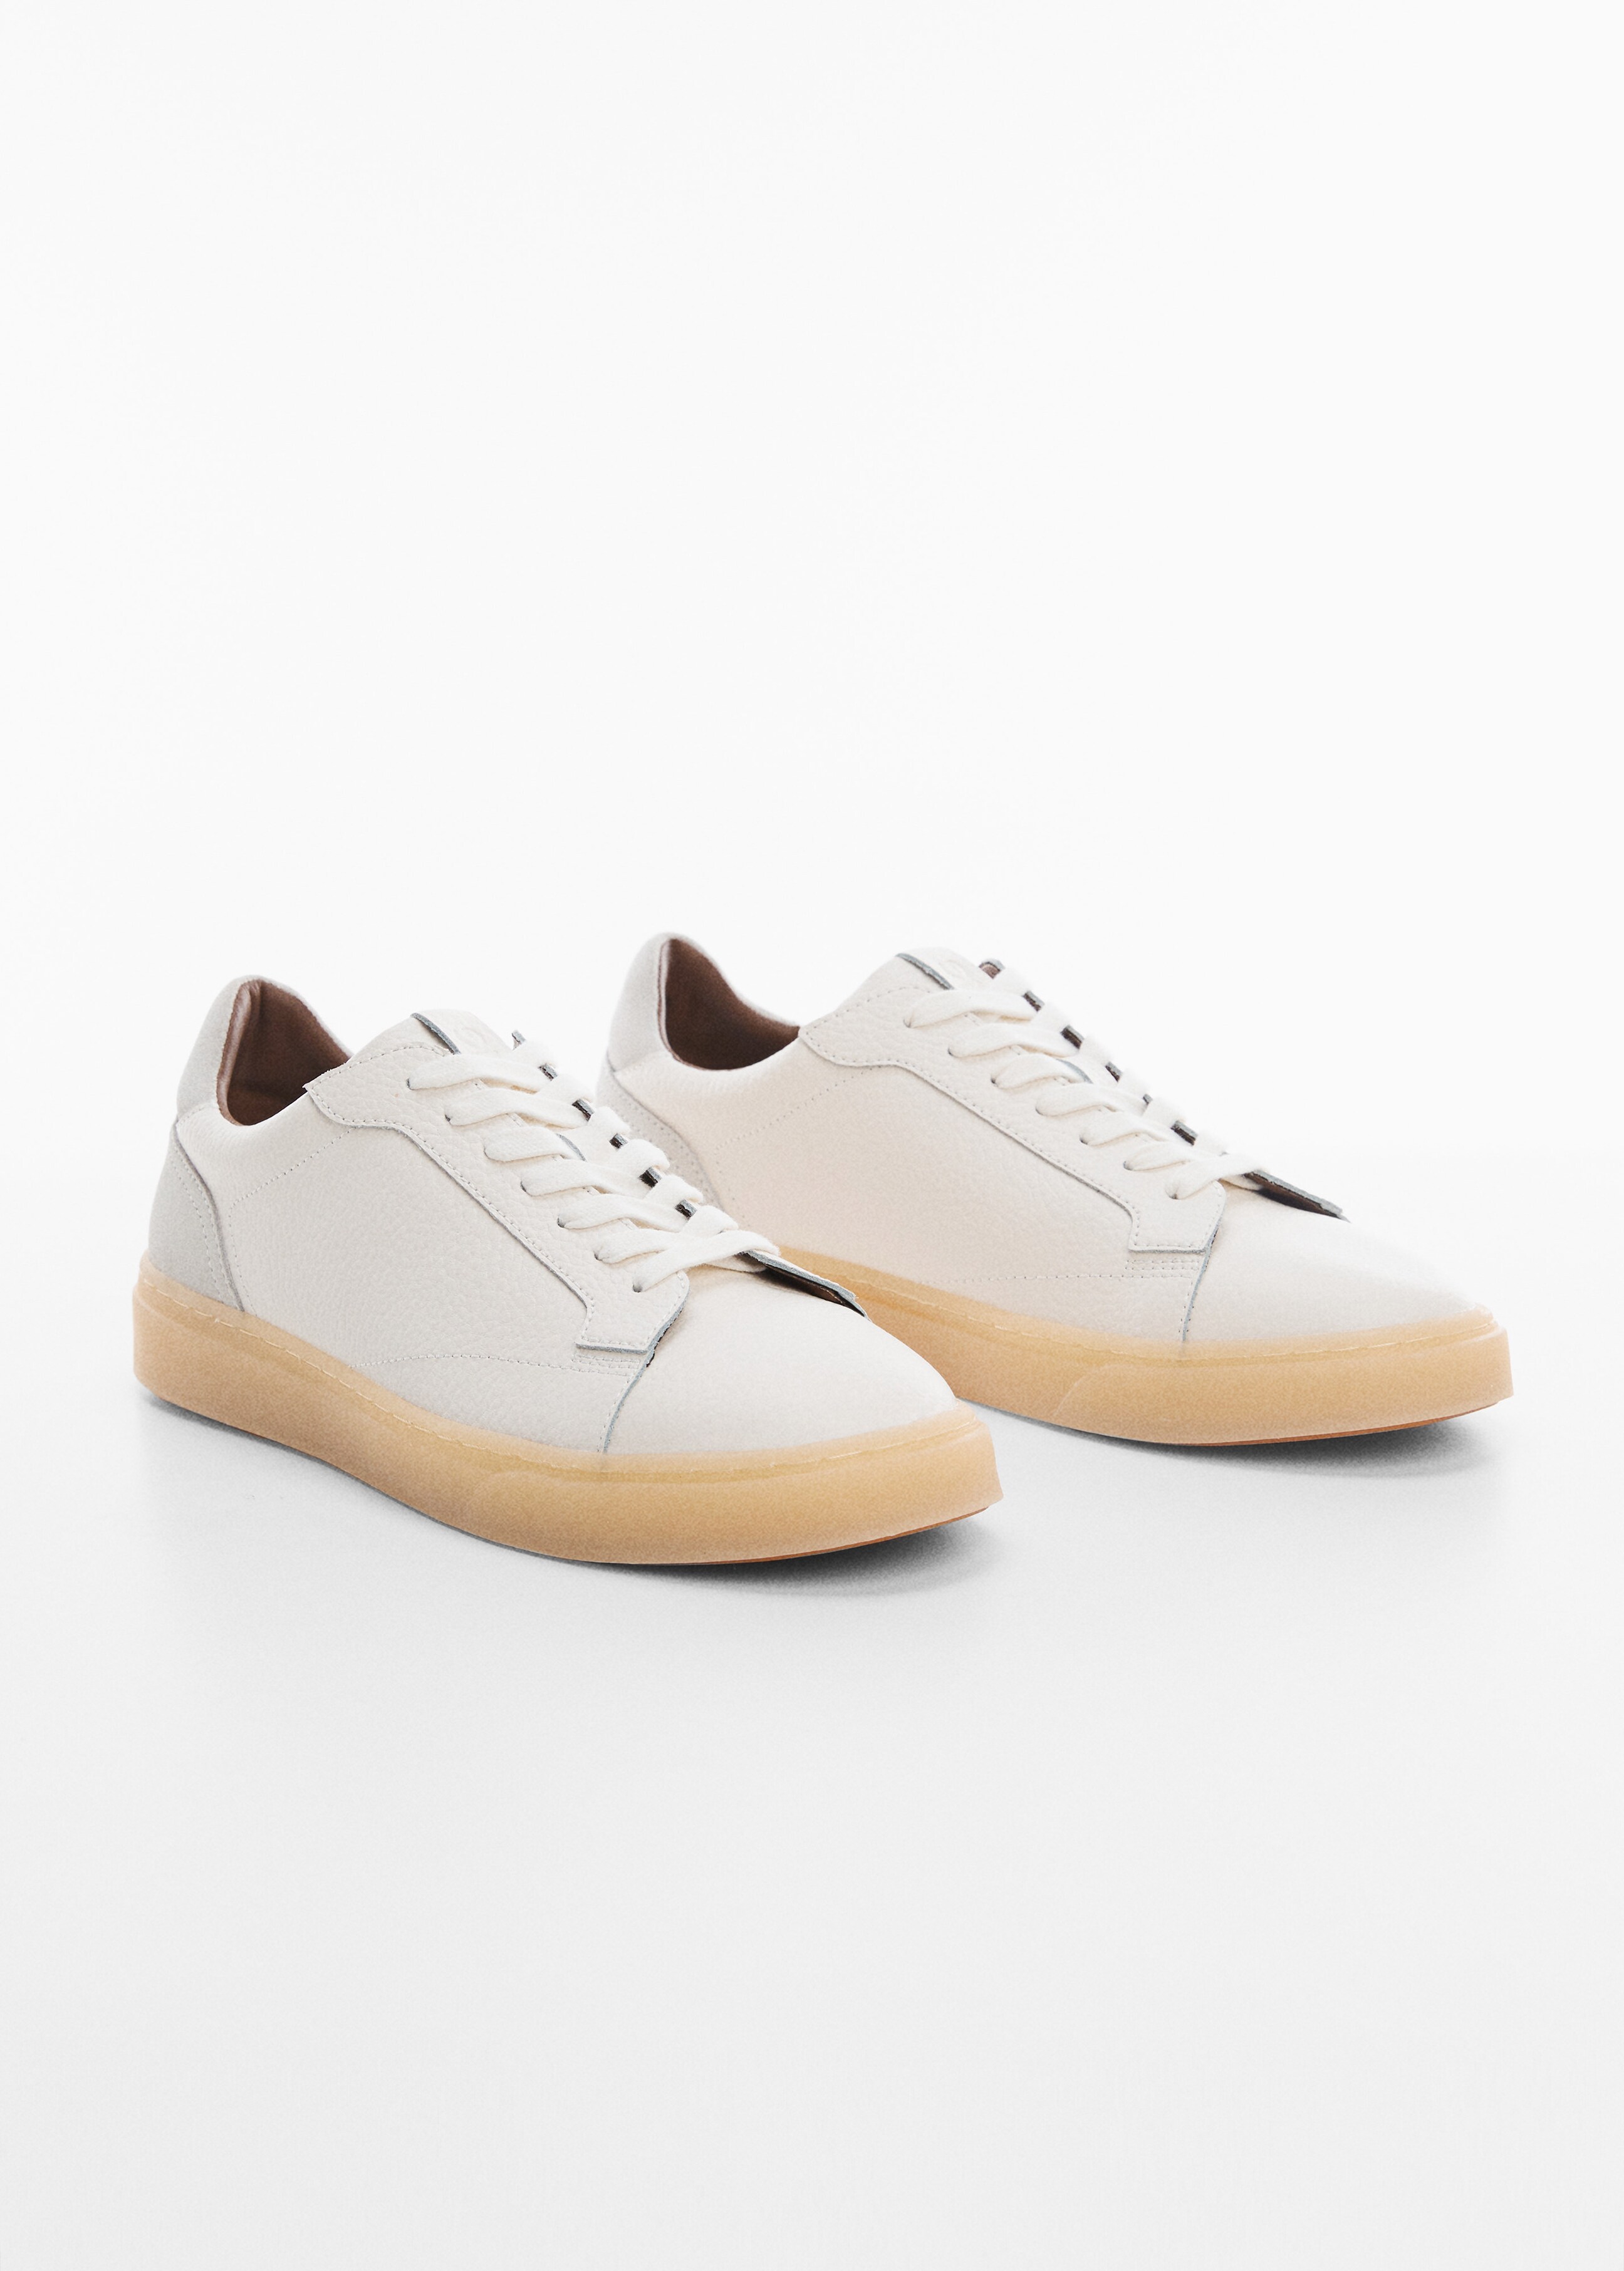 Nappa leather sneakers - Medium plane